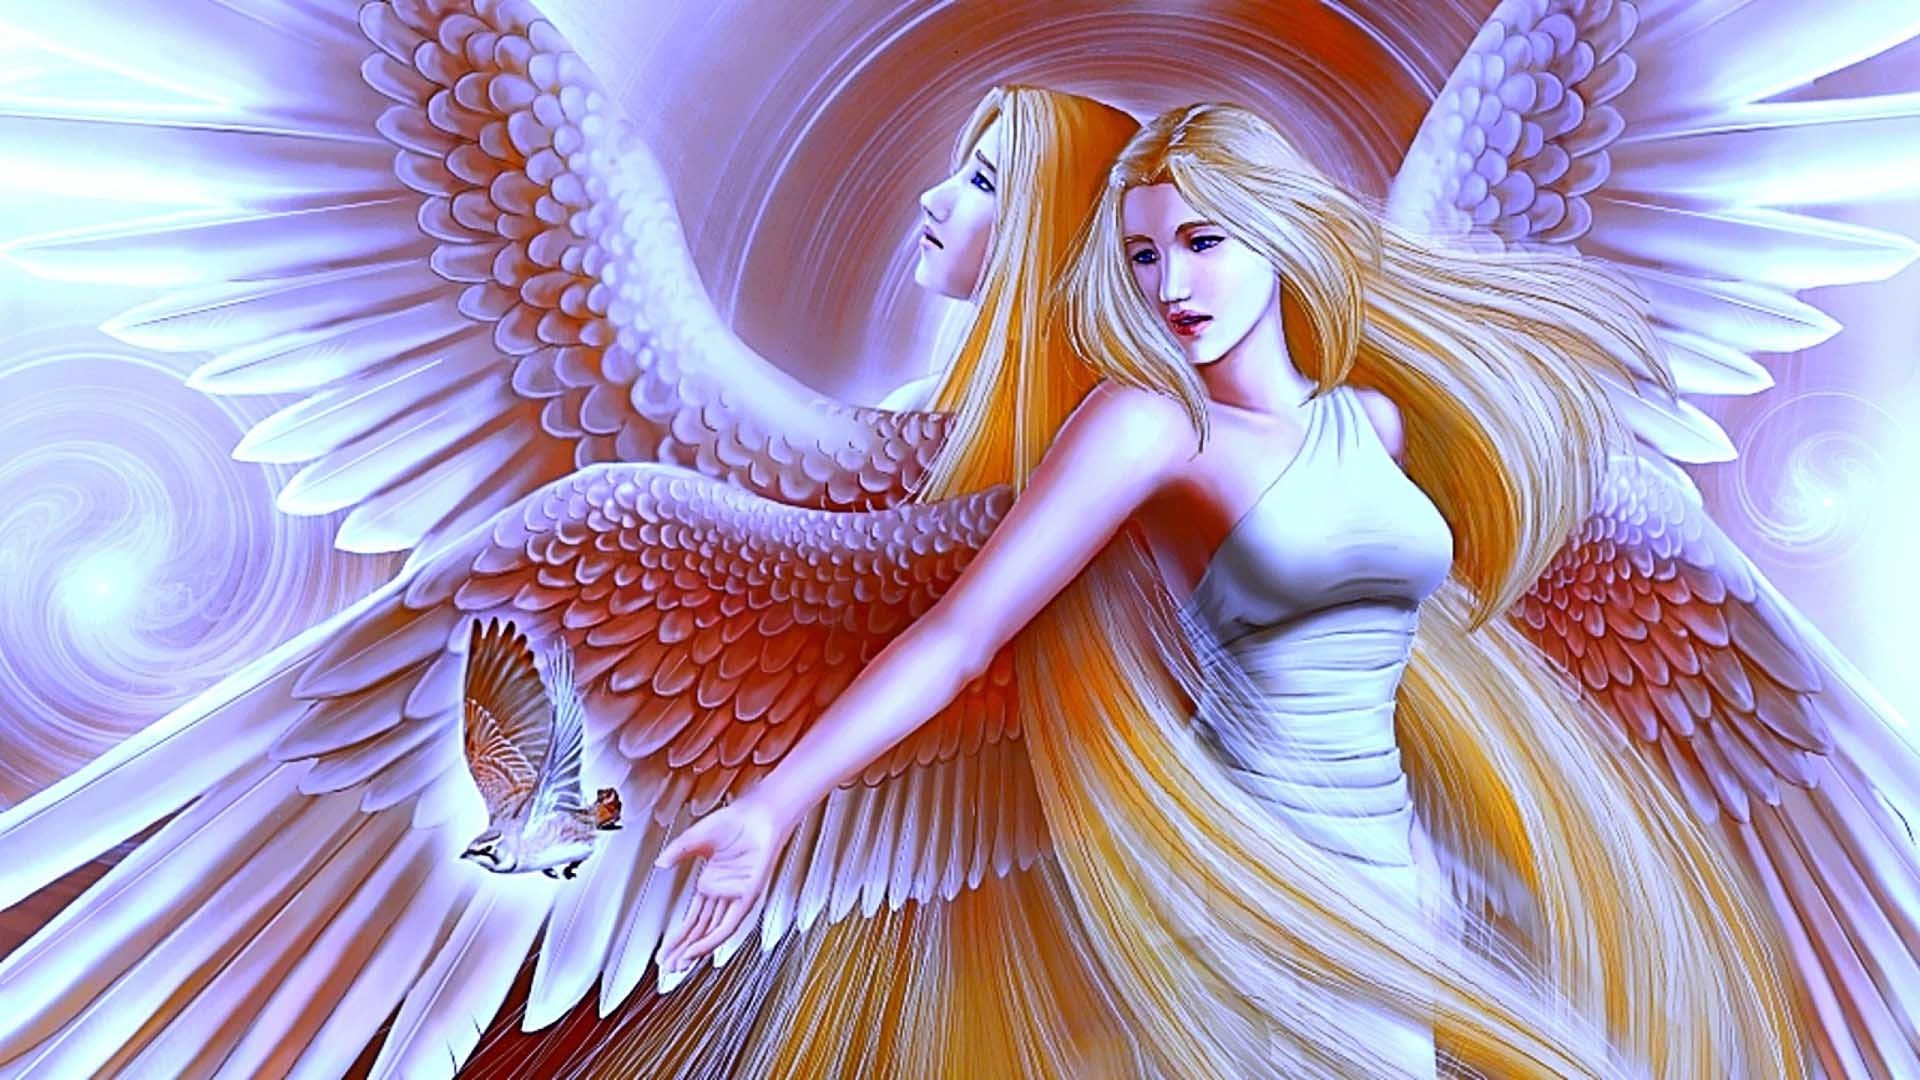 Free Angel Wallpaper Download Adorable Wallpapers Pinterest Angel wallpaper, Wallpaper and Angel